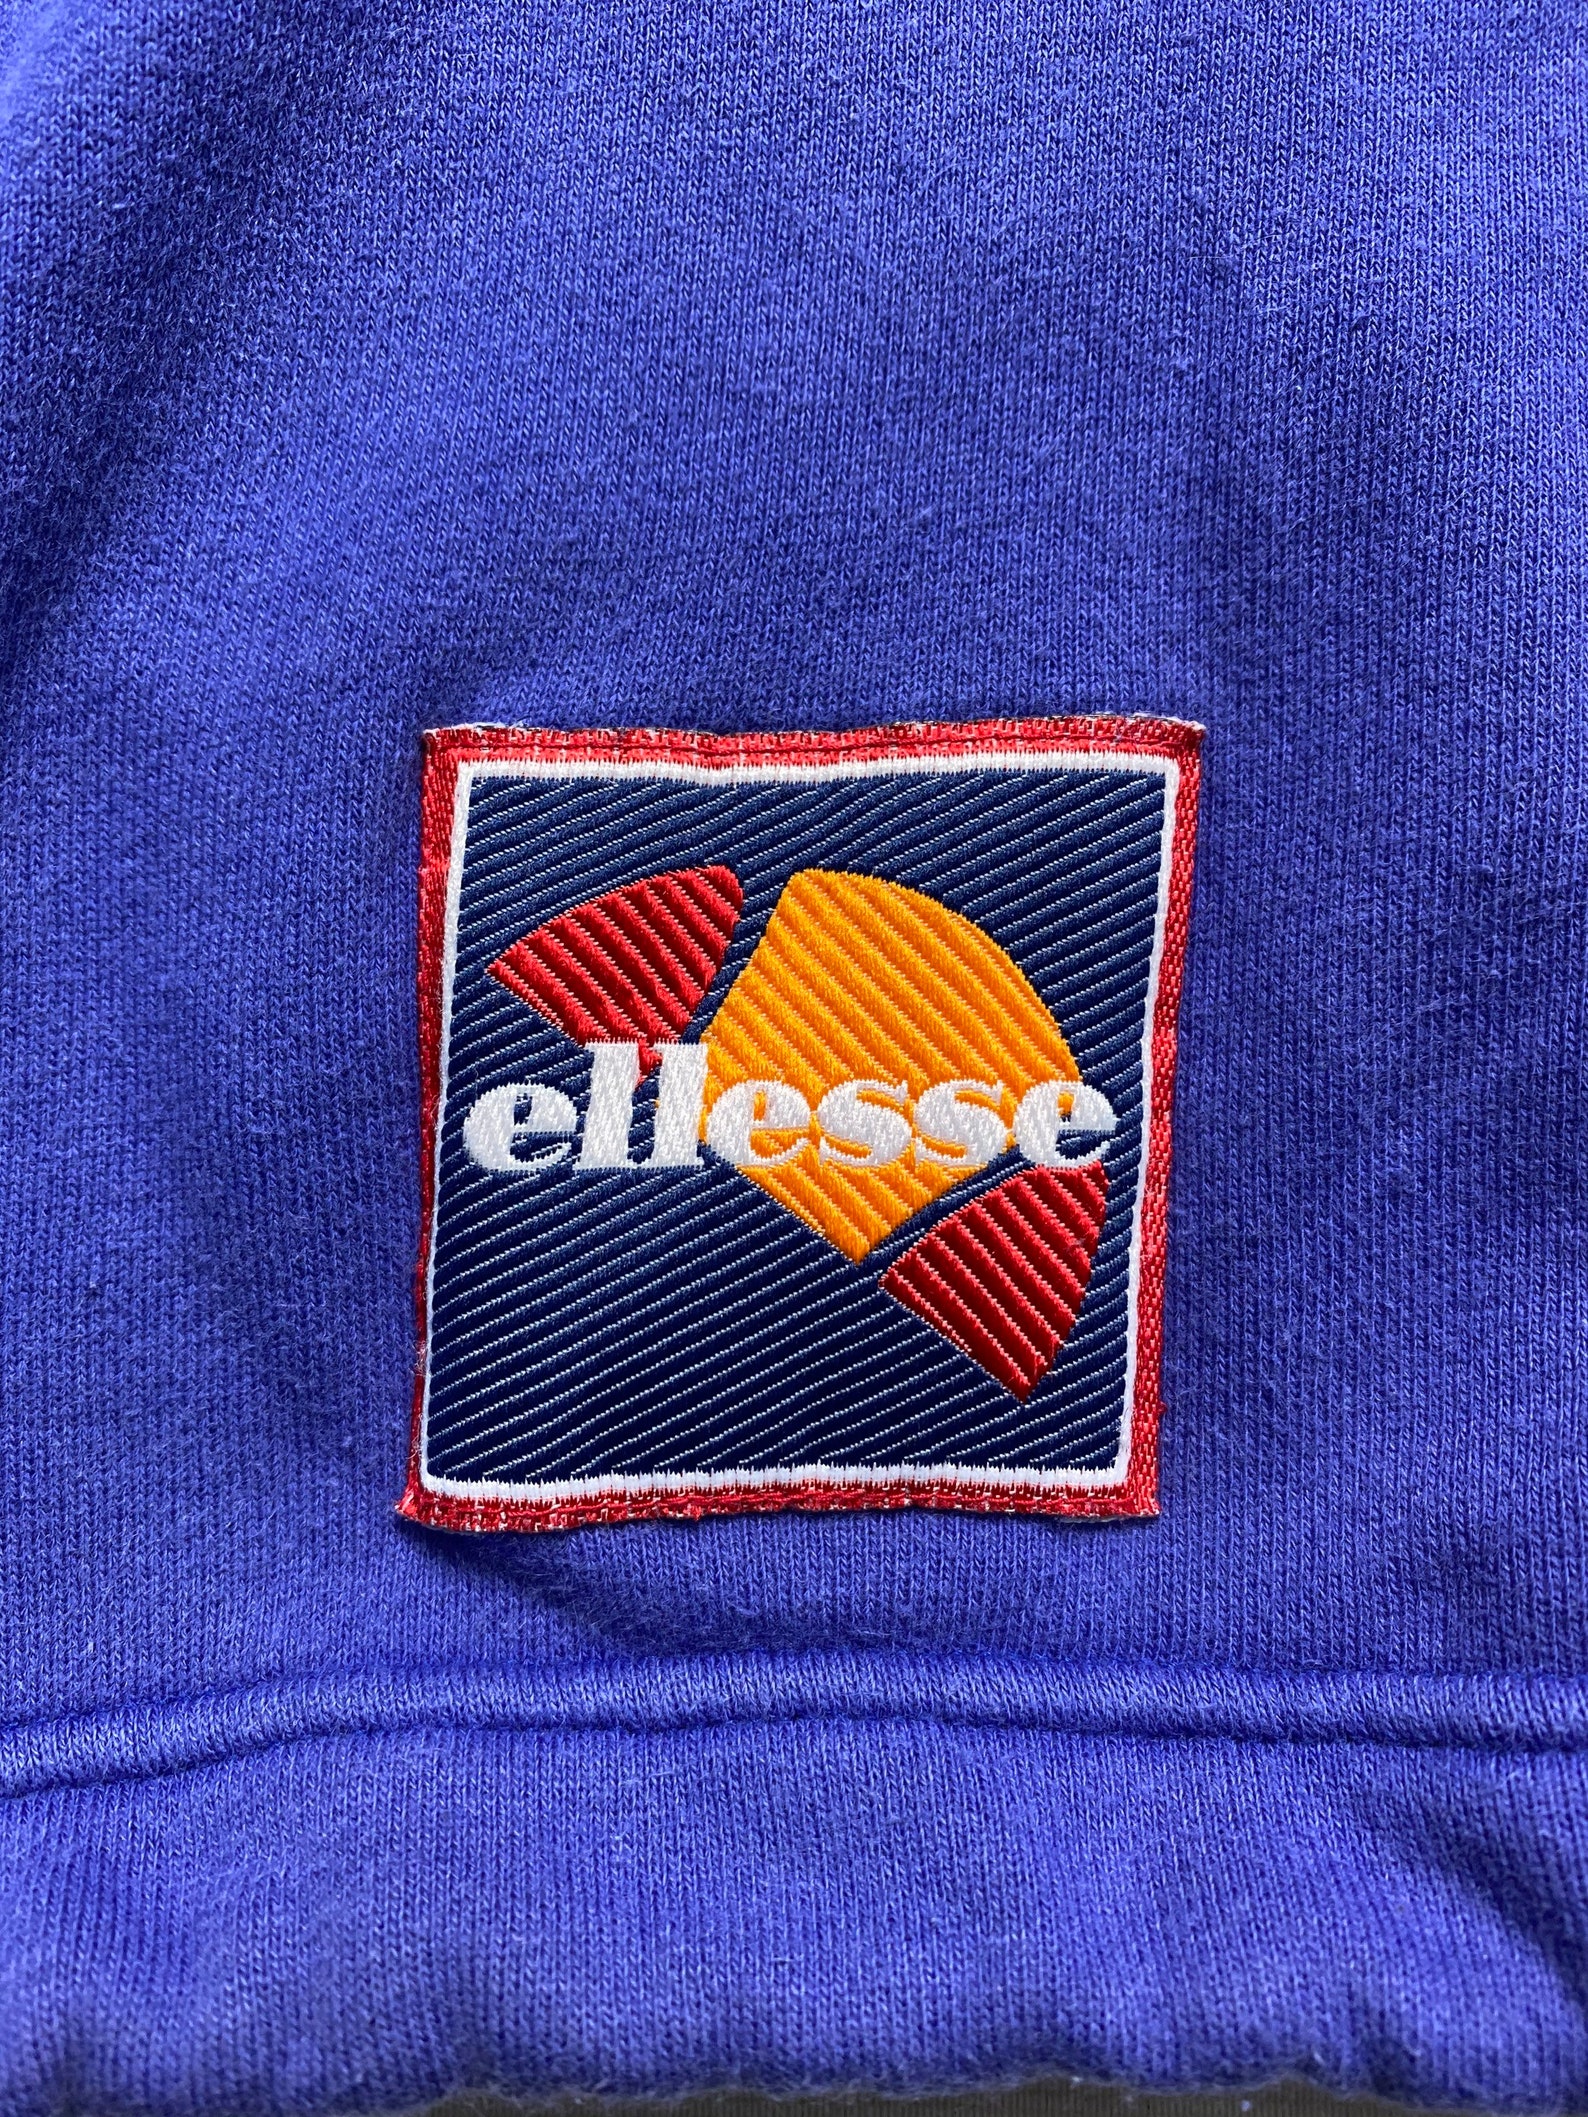 Vintage Ellesse Embroidered Logo Hoodies | Etsy